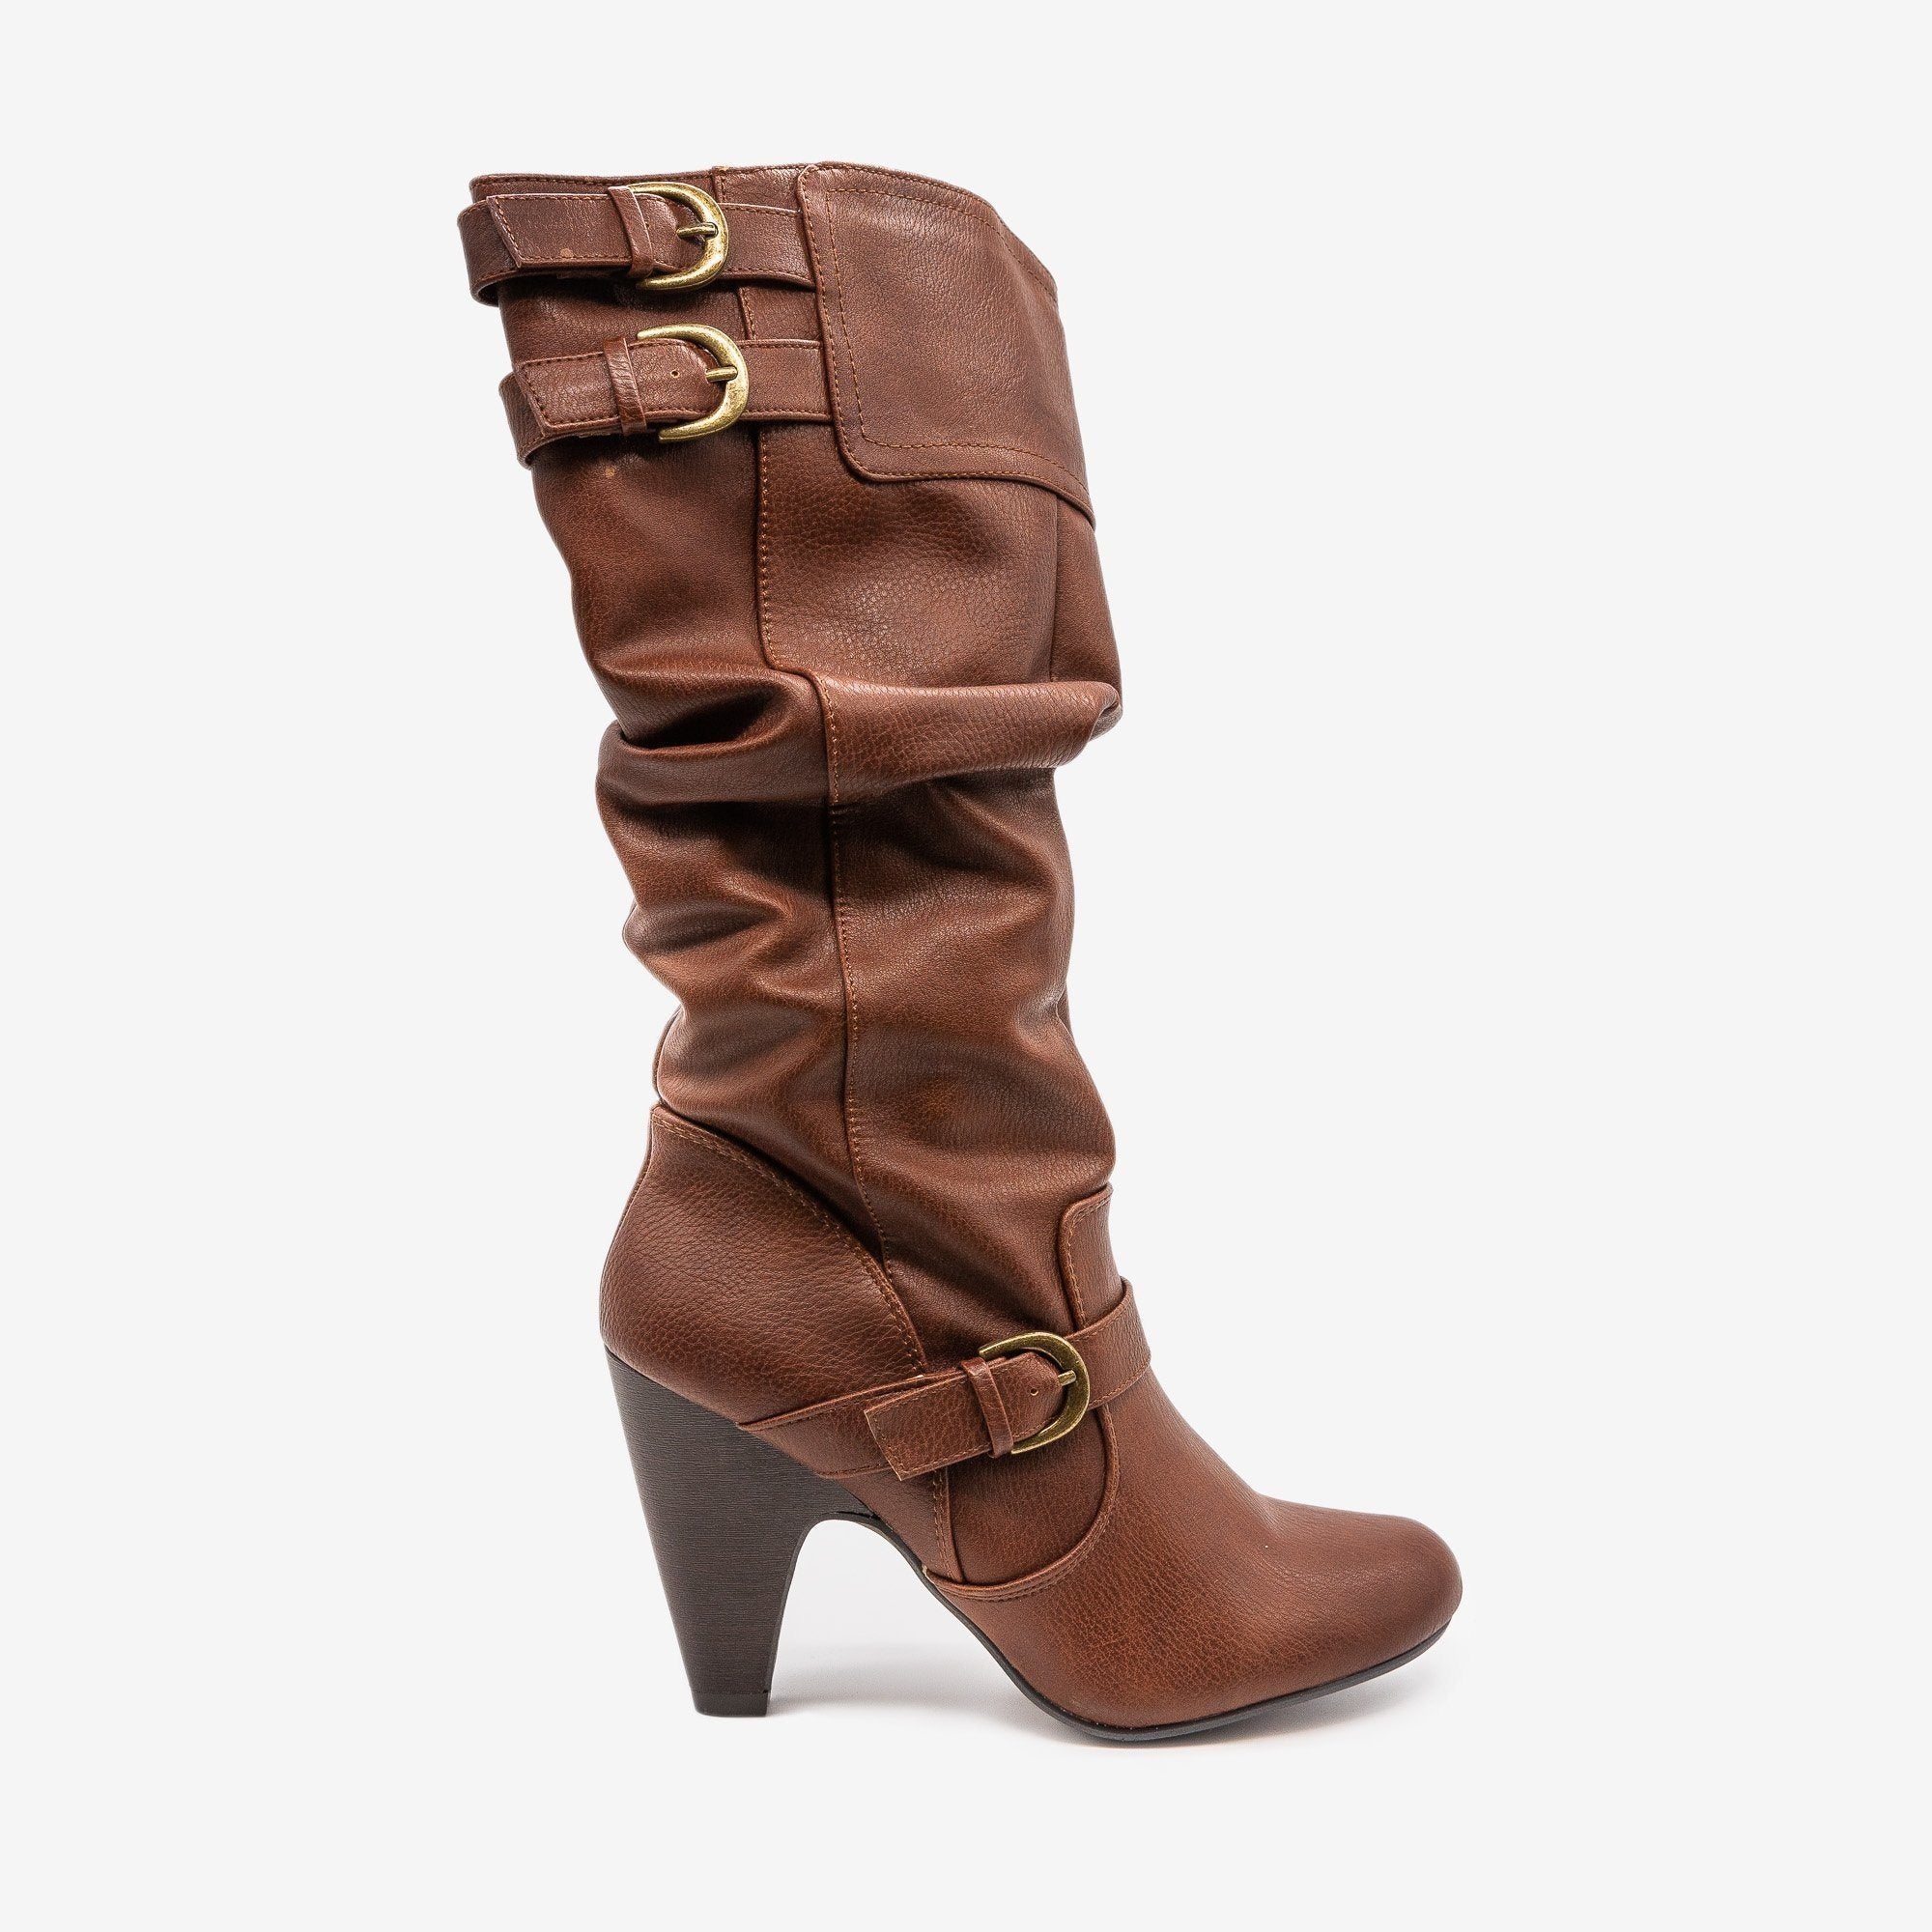 shuropody ladies boots sale